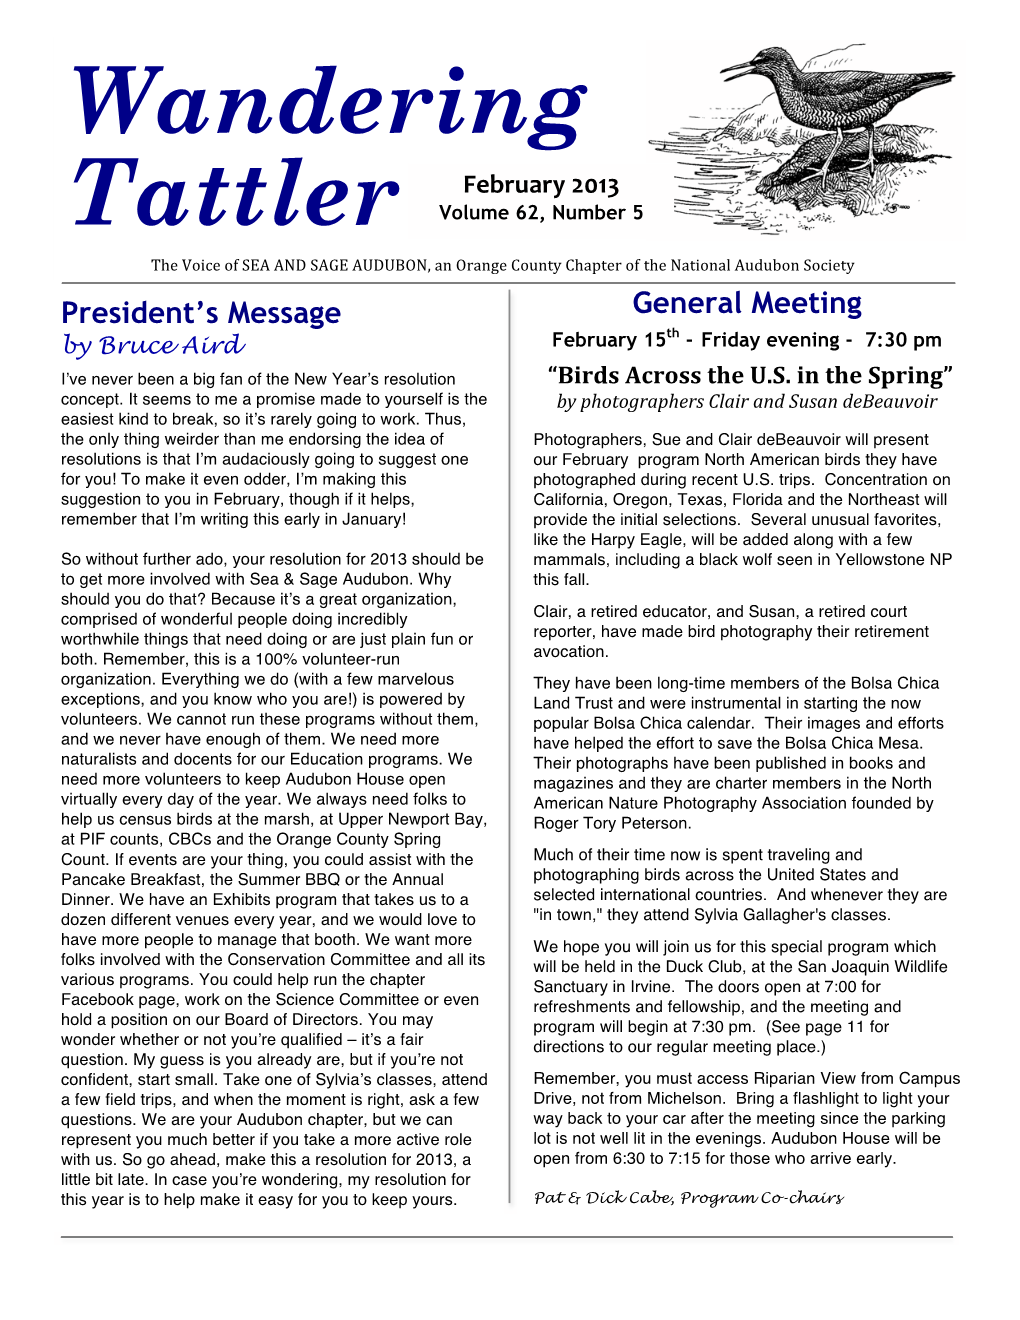 Wandering Tattler 3 February 2013